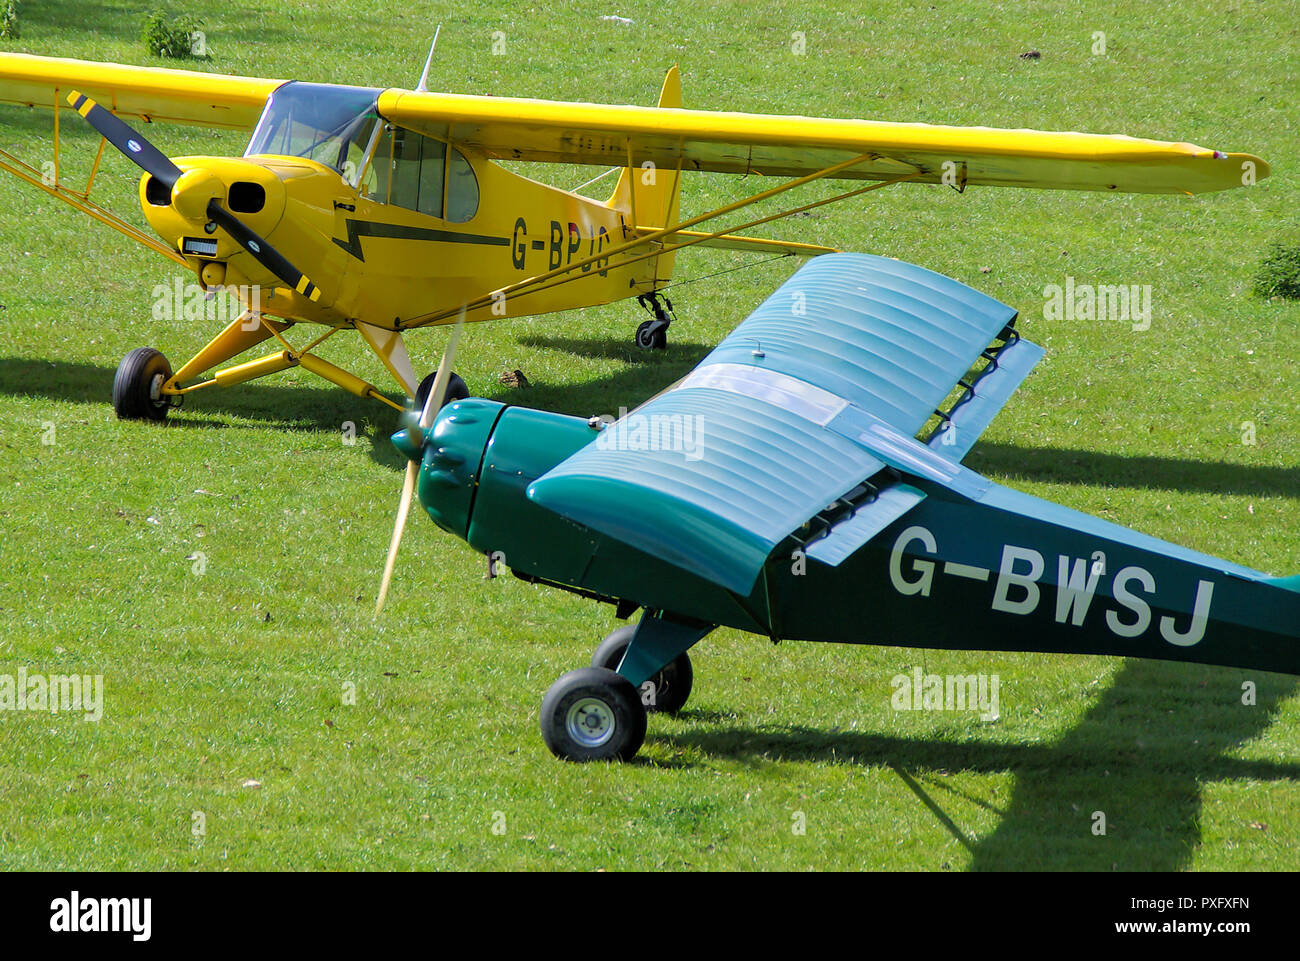 Denney Kitfox Mk3 plane and Piper PA18 Super Cub planes on the grass at Henham Park Suffolk countryside grass airstrip. Light aviation Stock Photo